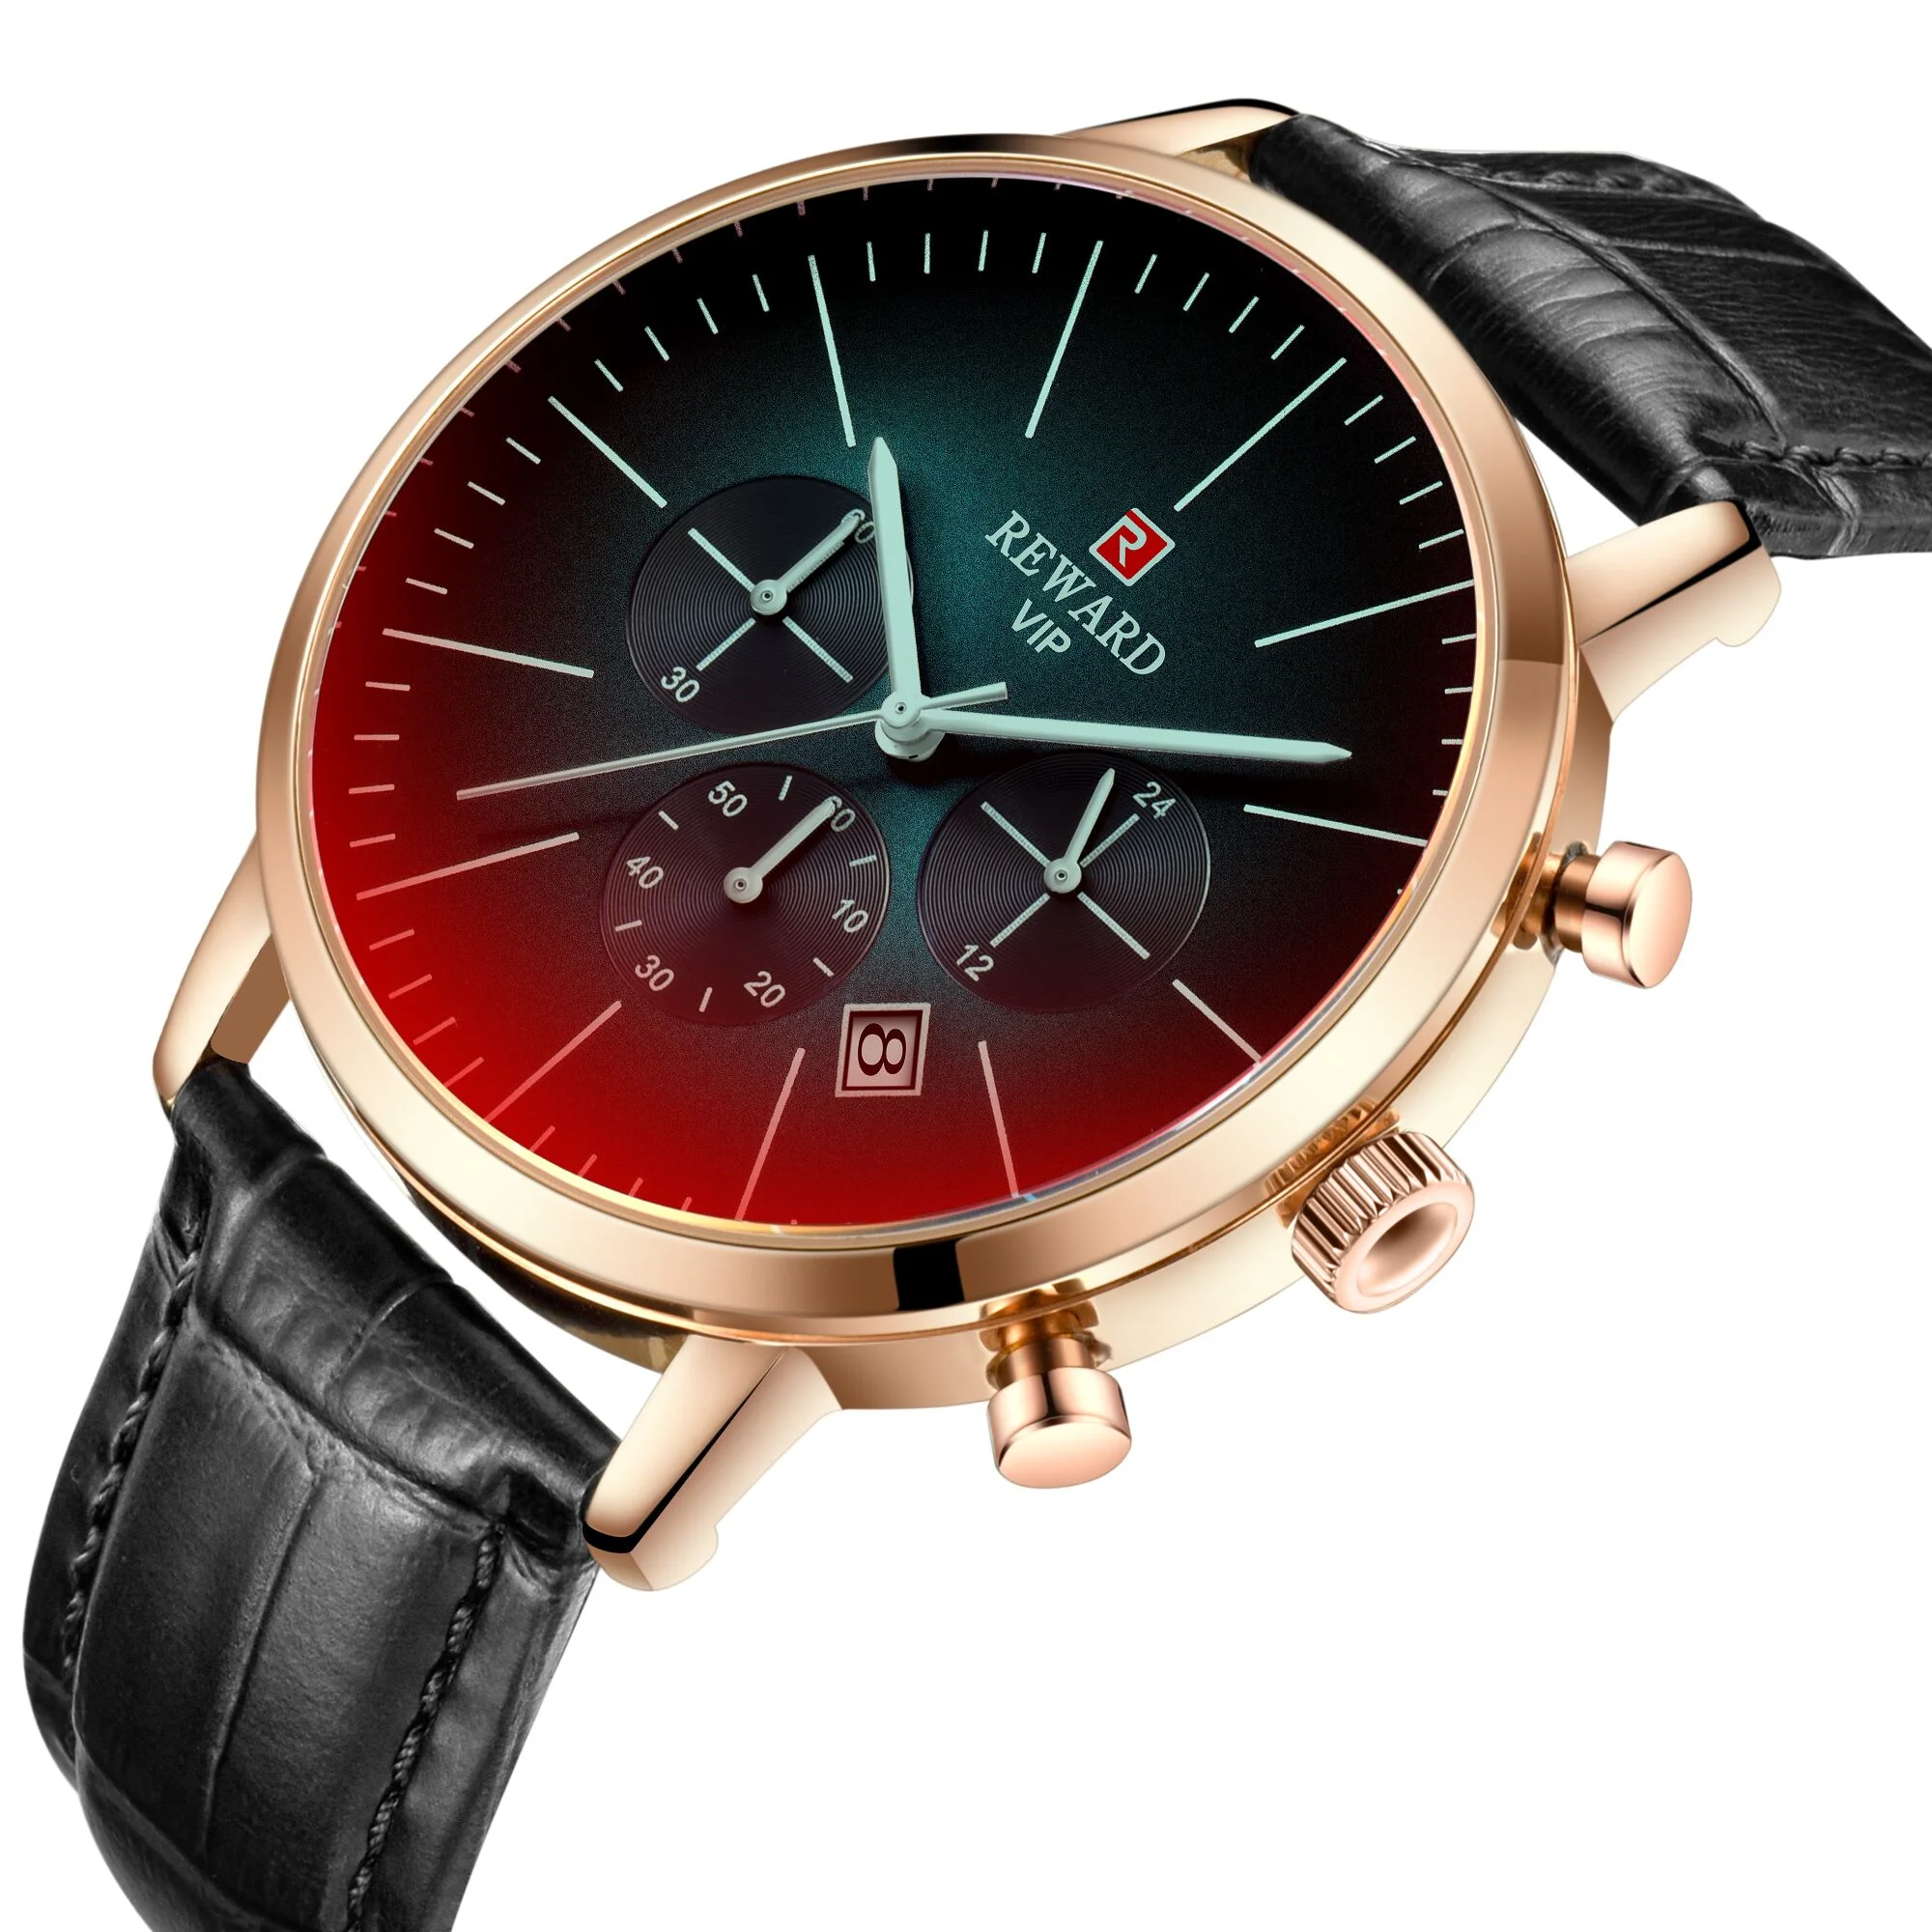 Reward Vip Watch RD83001M Changing Color Glass Men's Chronograph leather strap Fashion Water Resistant quartz Watch